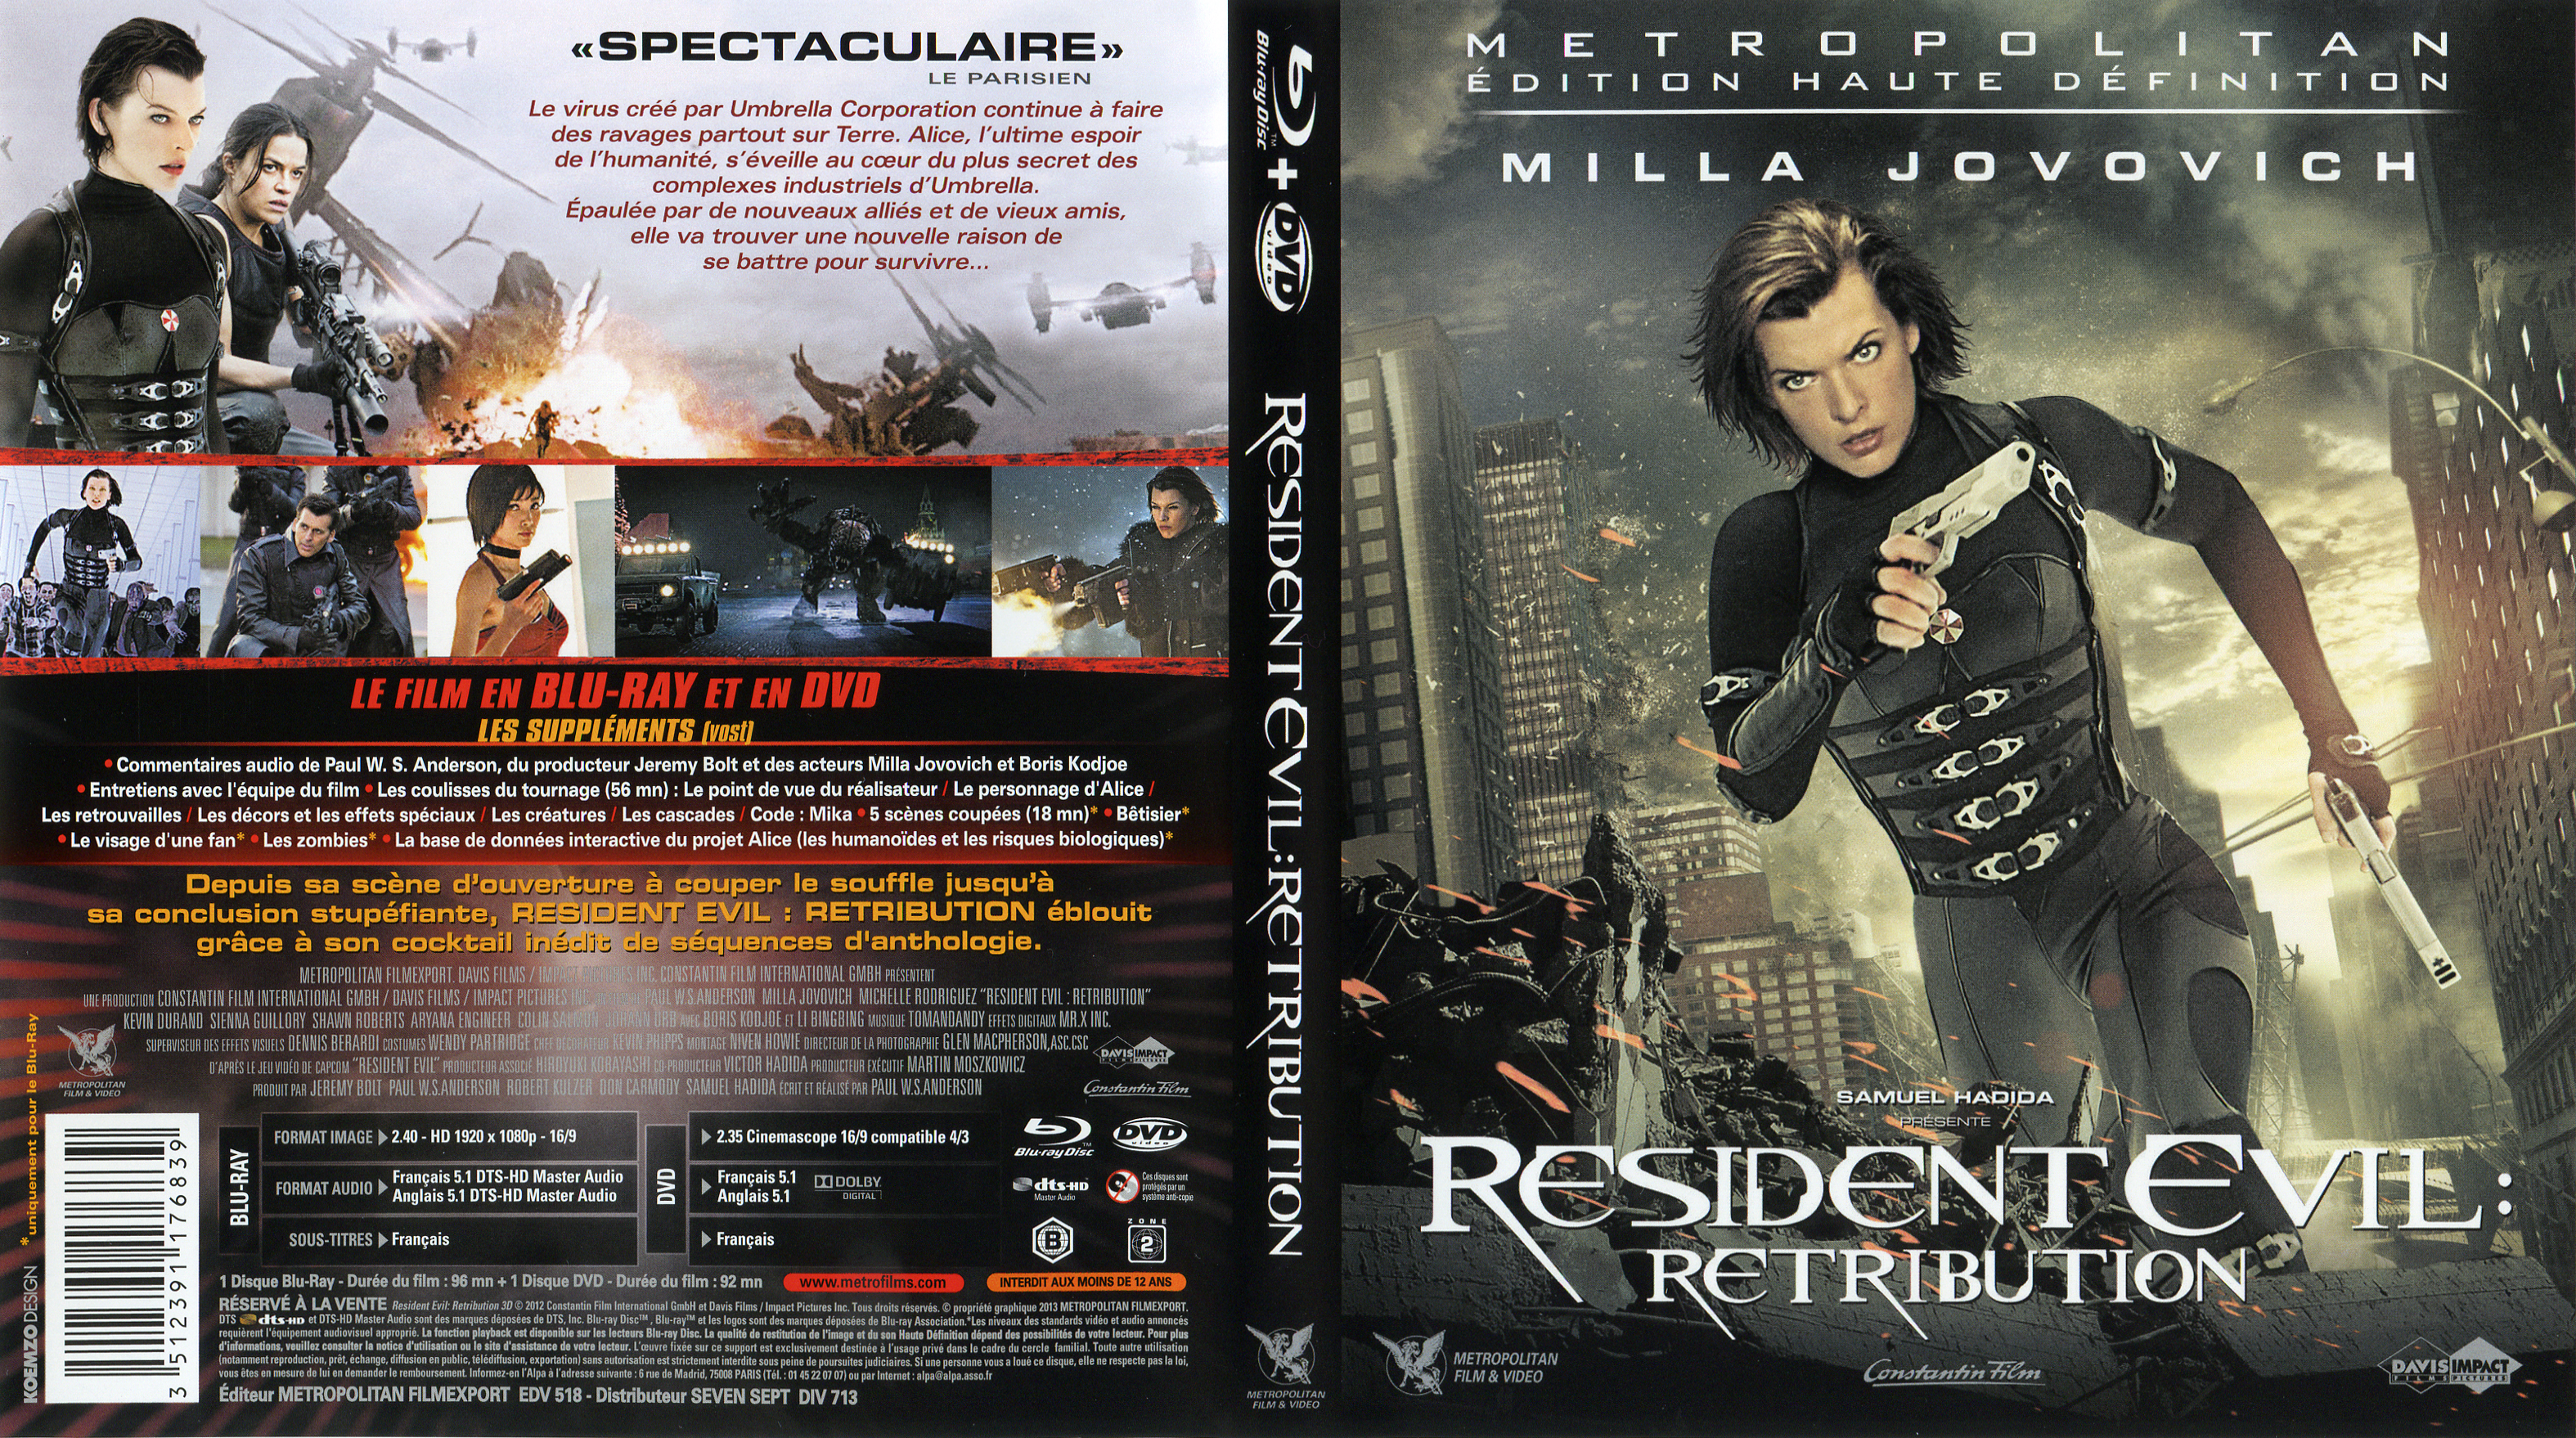 Jaquette DVD Resident Evil: Retribution (BLU-RAY) v2